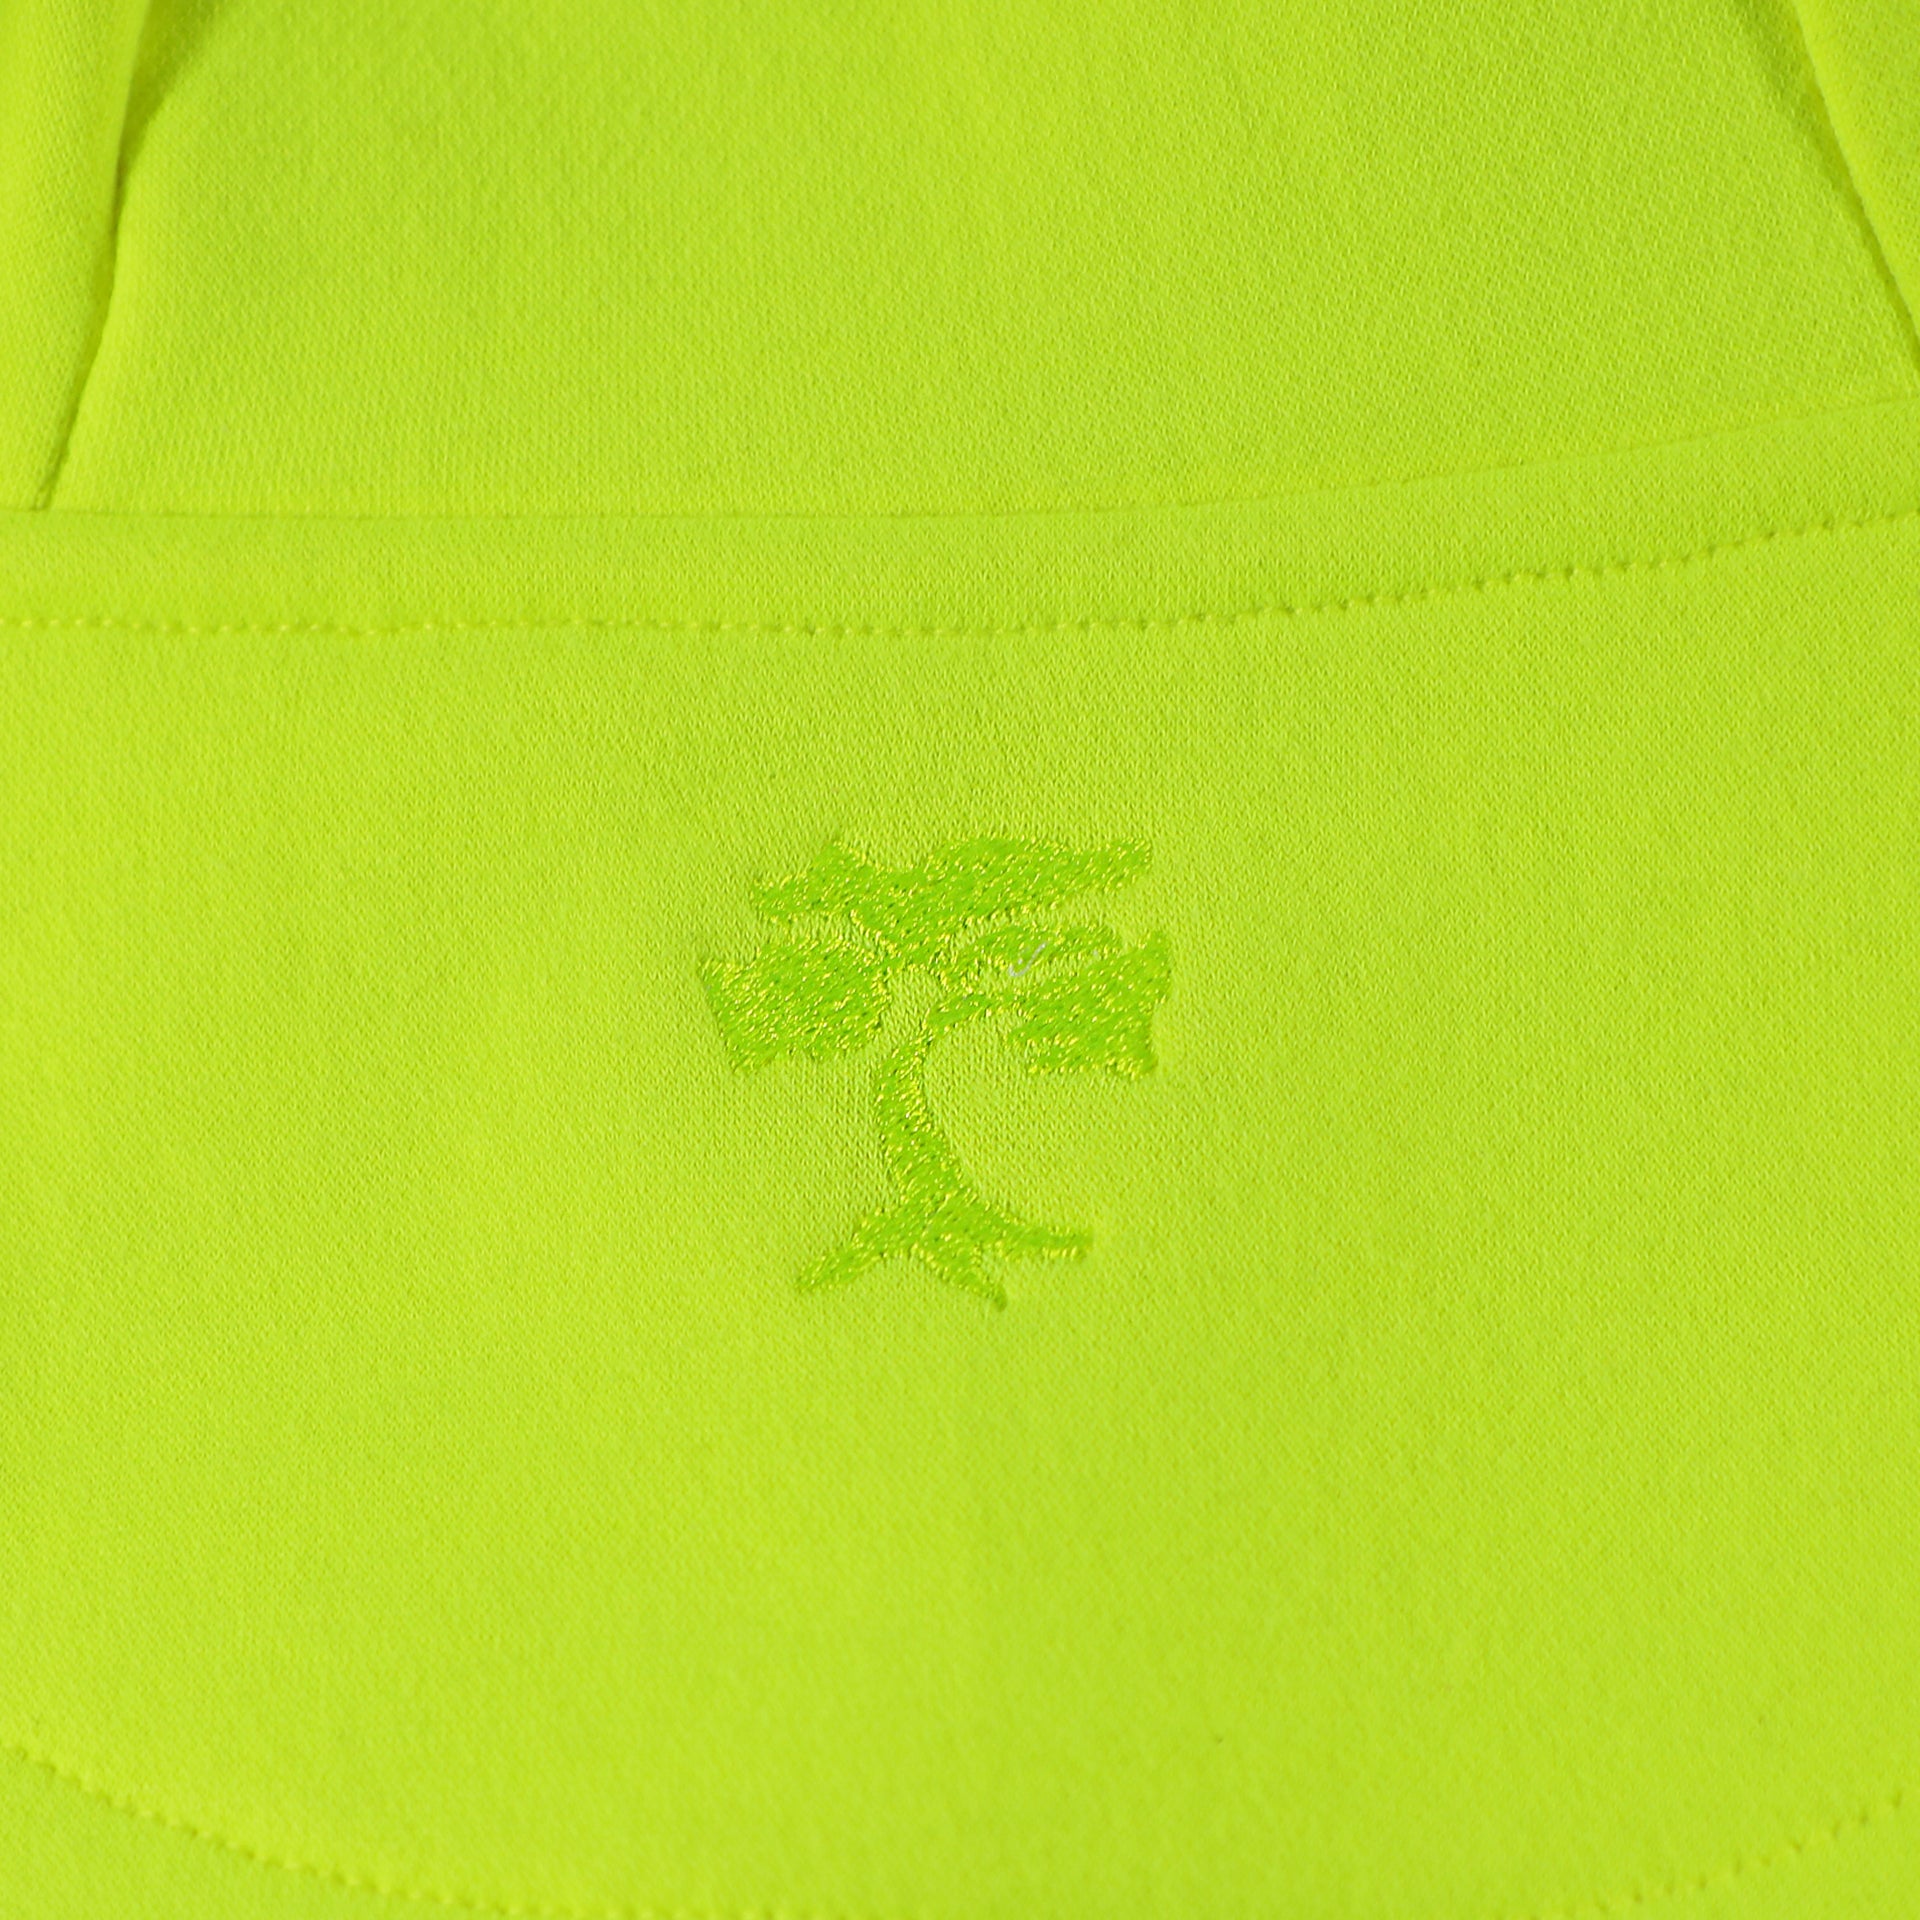 bonsai tree logo on the Frozen Yellow Unbasic Fleece Stash Pocket Sunset Park Tapered Zipper Hoodie | Fleece Neon Yellow Hoodie